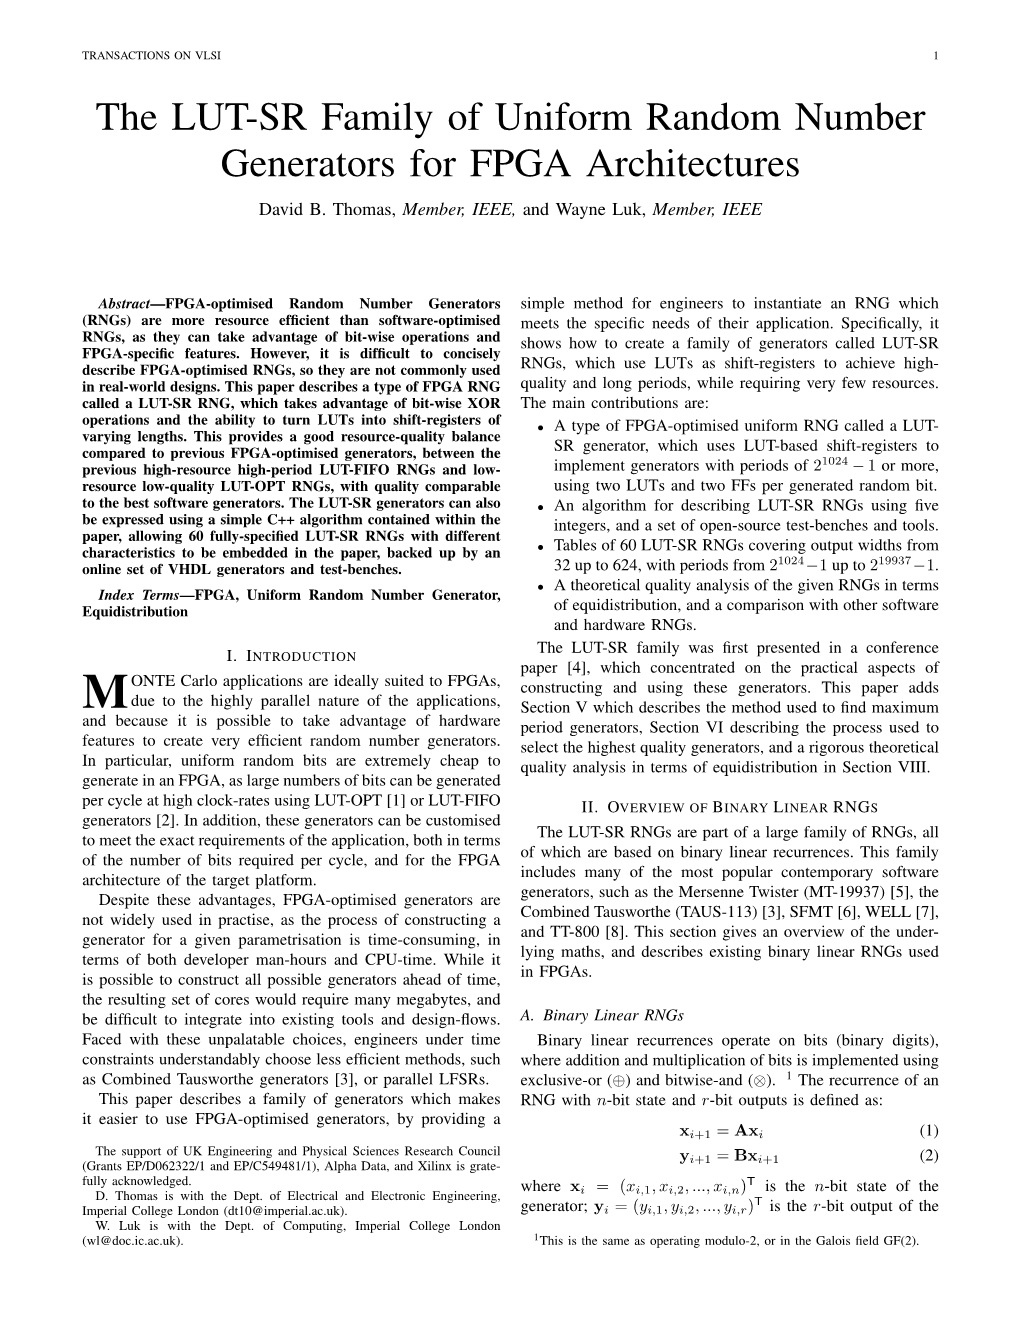 The LUT-SR Family of Uniform Random Number Generators for FPGA Architectures David B